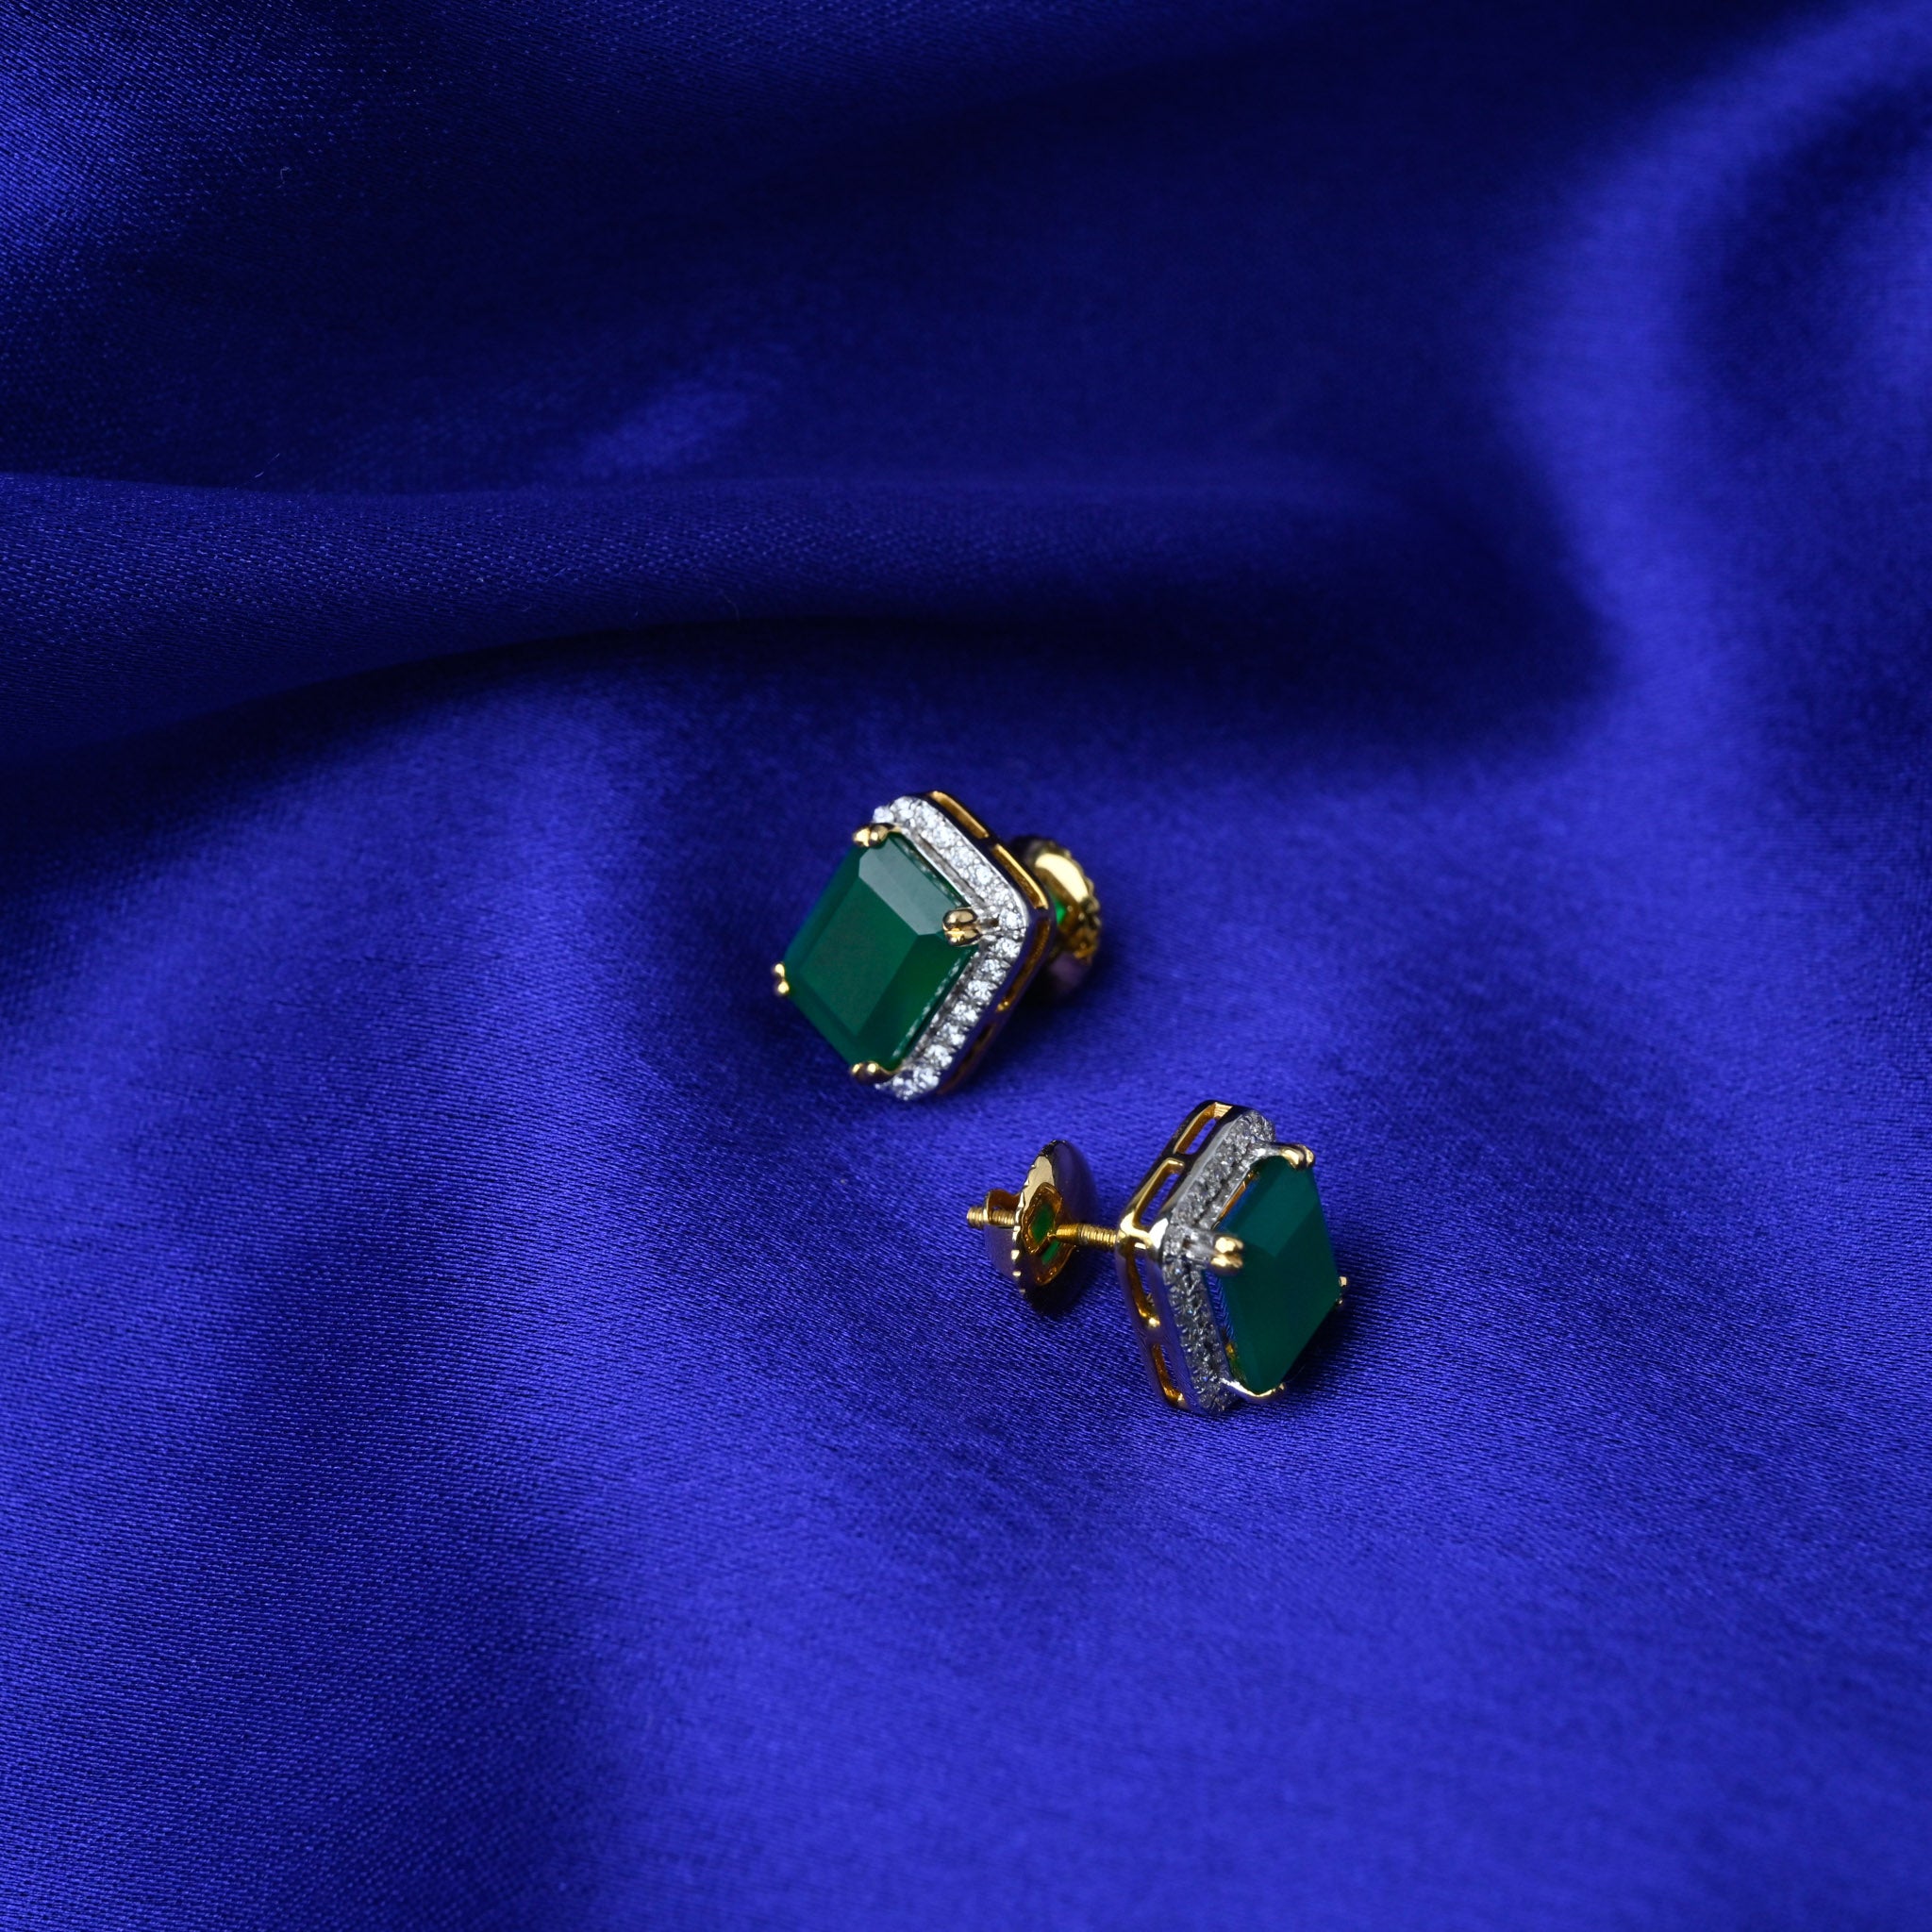 Emerald Estate - Earrings with Pendant Set